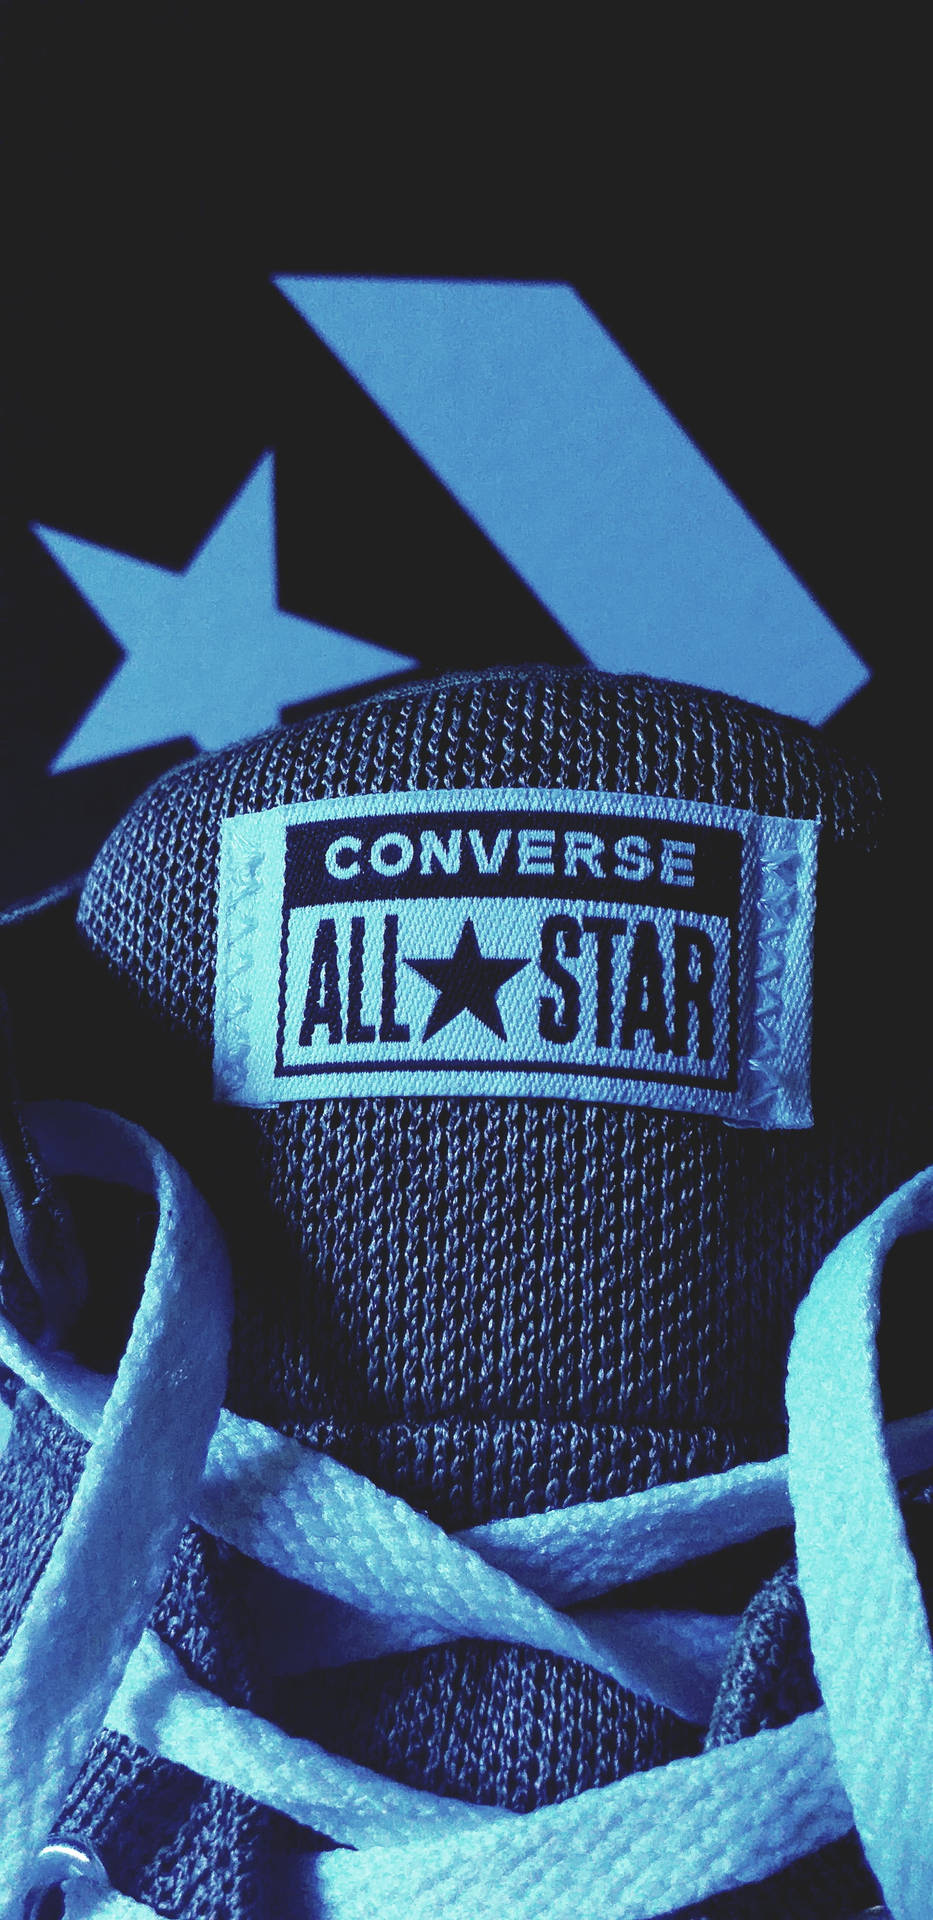 Blauesall-star Converse-logo Wallpaper